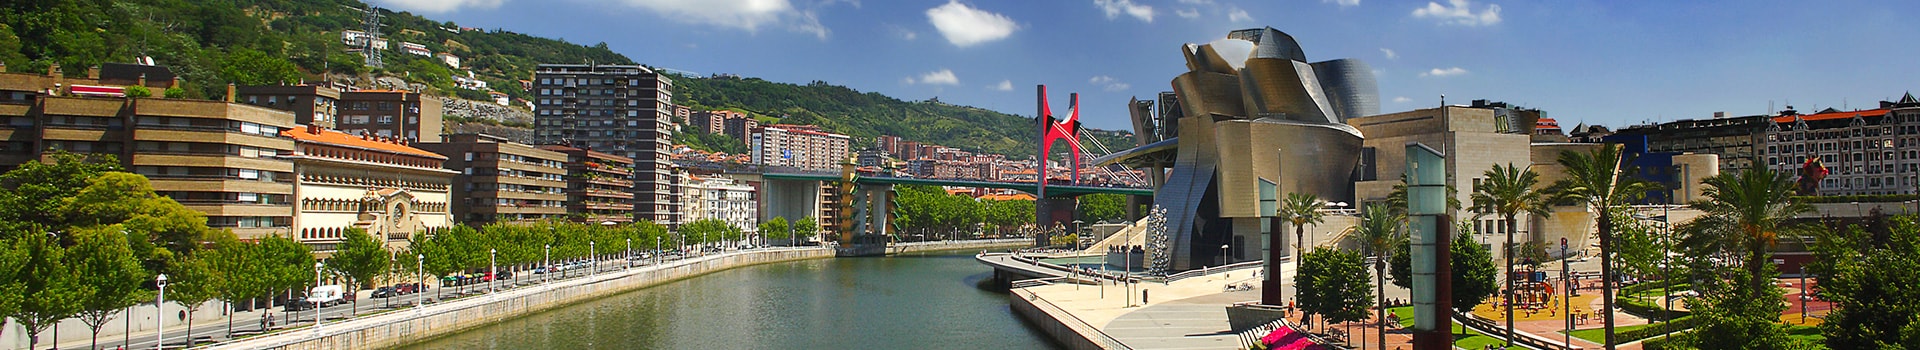 Grenade - Bilbao